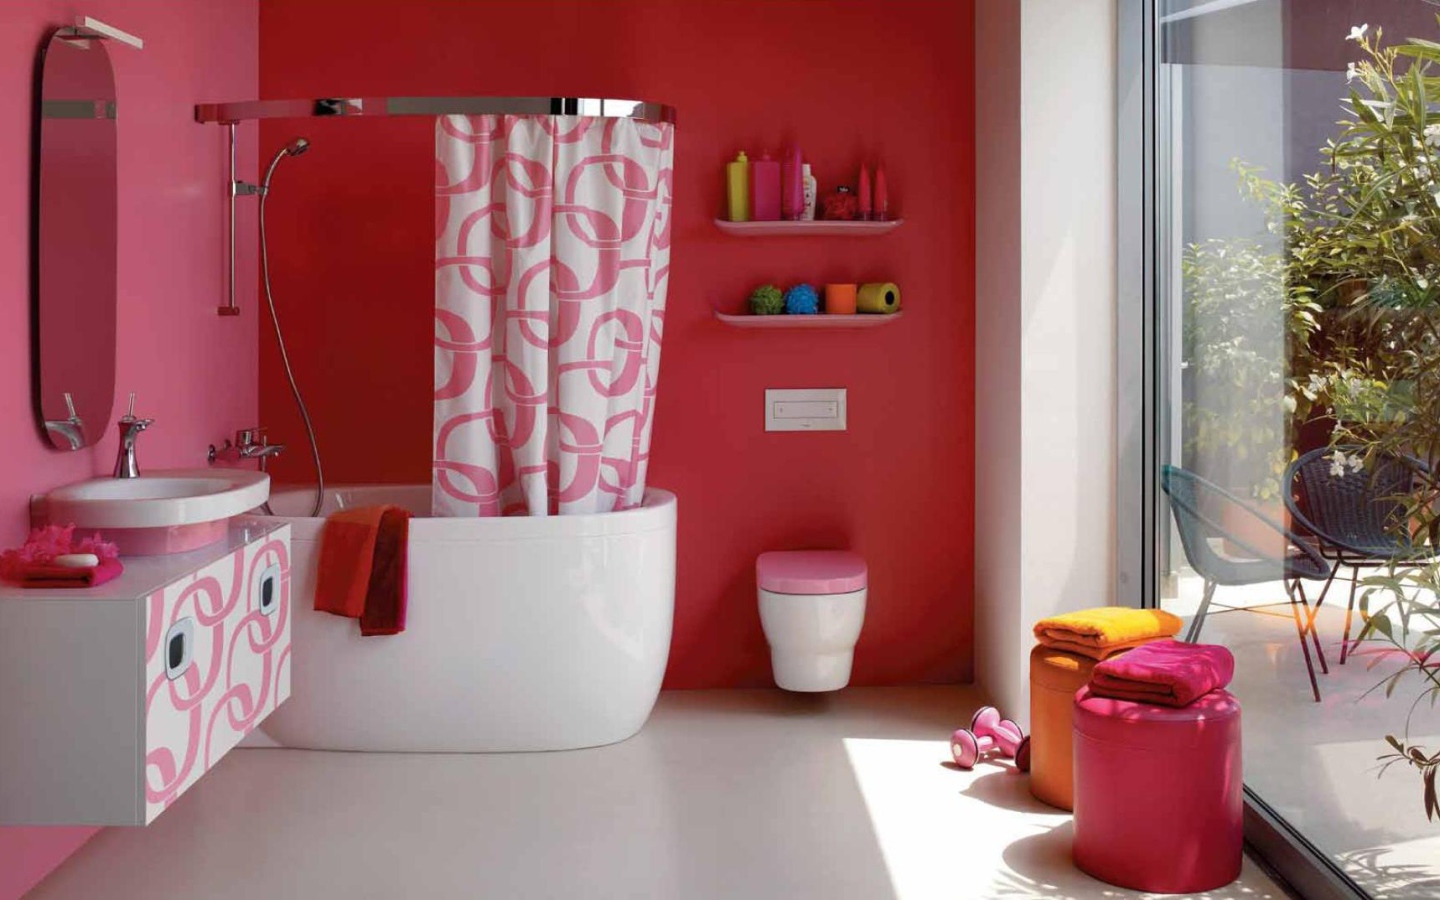 Bathroom in red tones